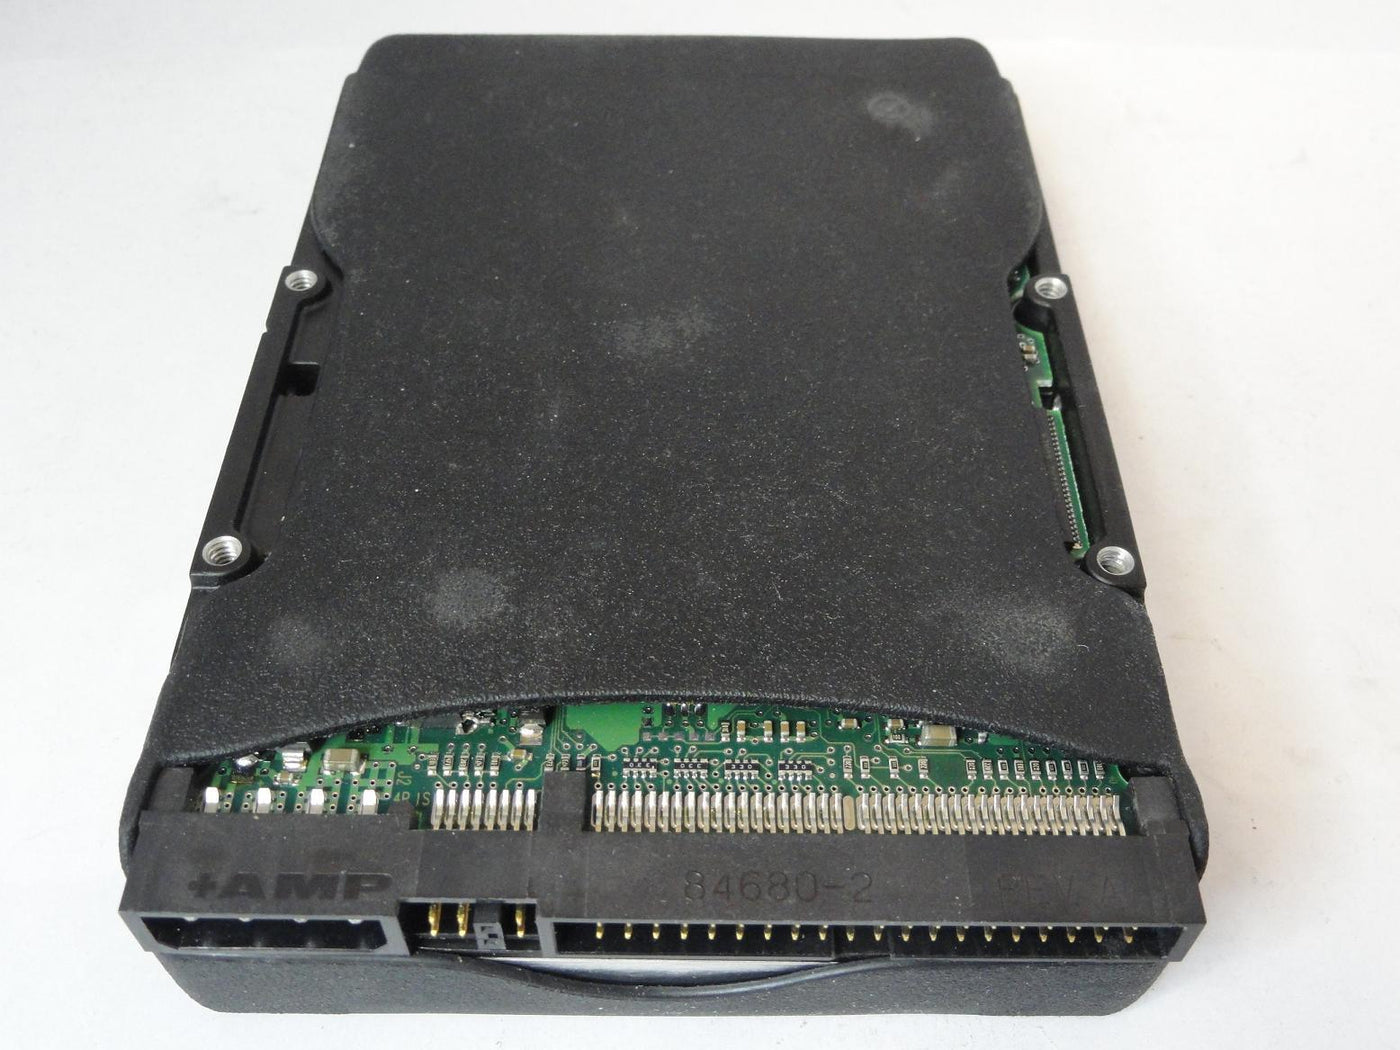 MC5554_9M9002-304_Seagate 4.3GB 5400rpm 3.5in Recertified HDD - Image2